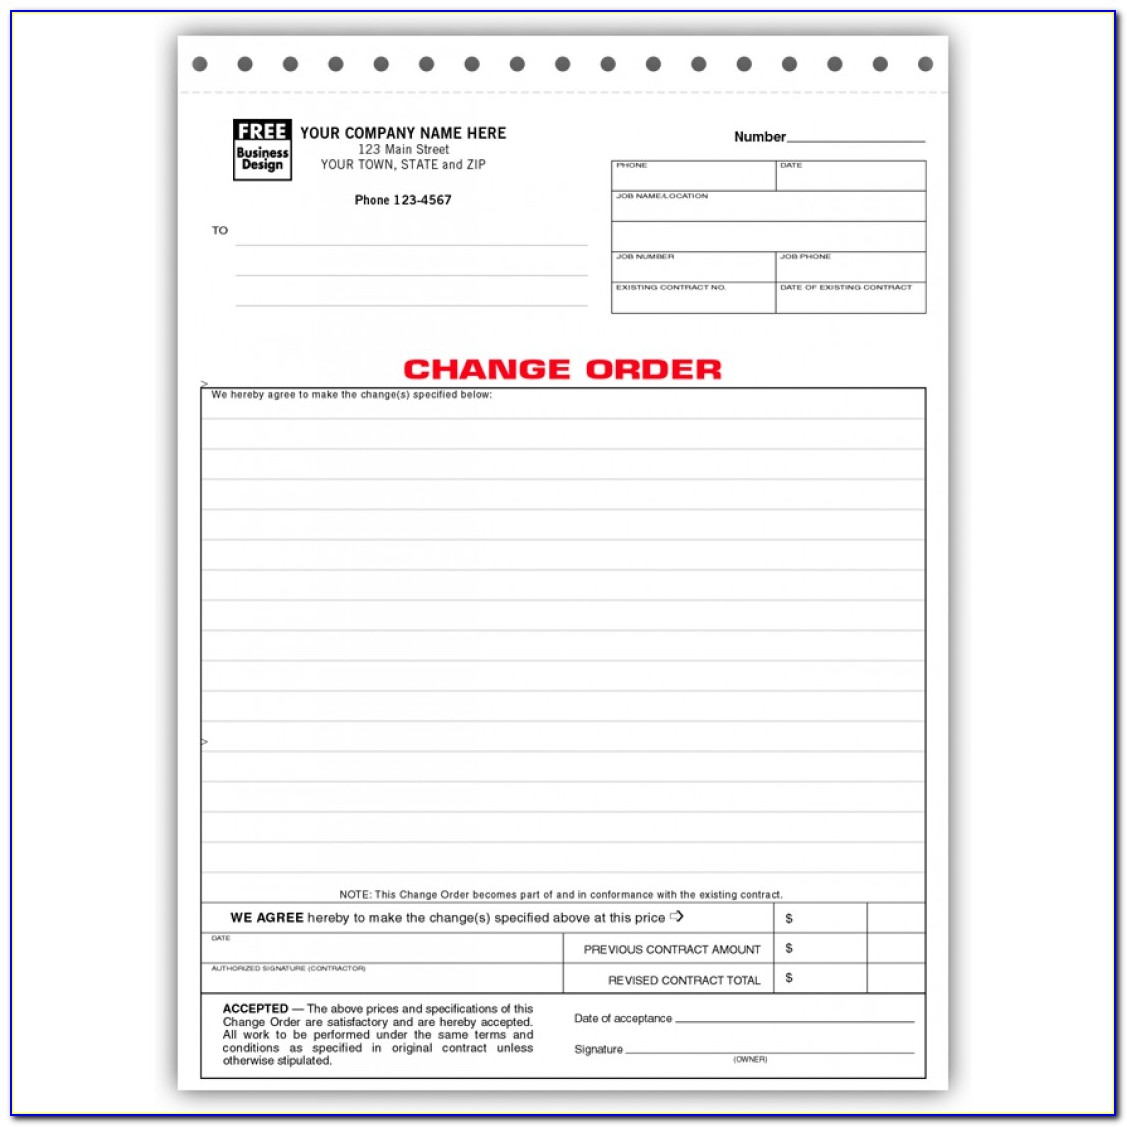 Philips Sonicare Flexcare Rebate Form Form Resume Examples 12O88WxOr8